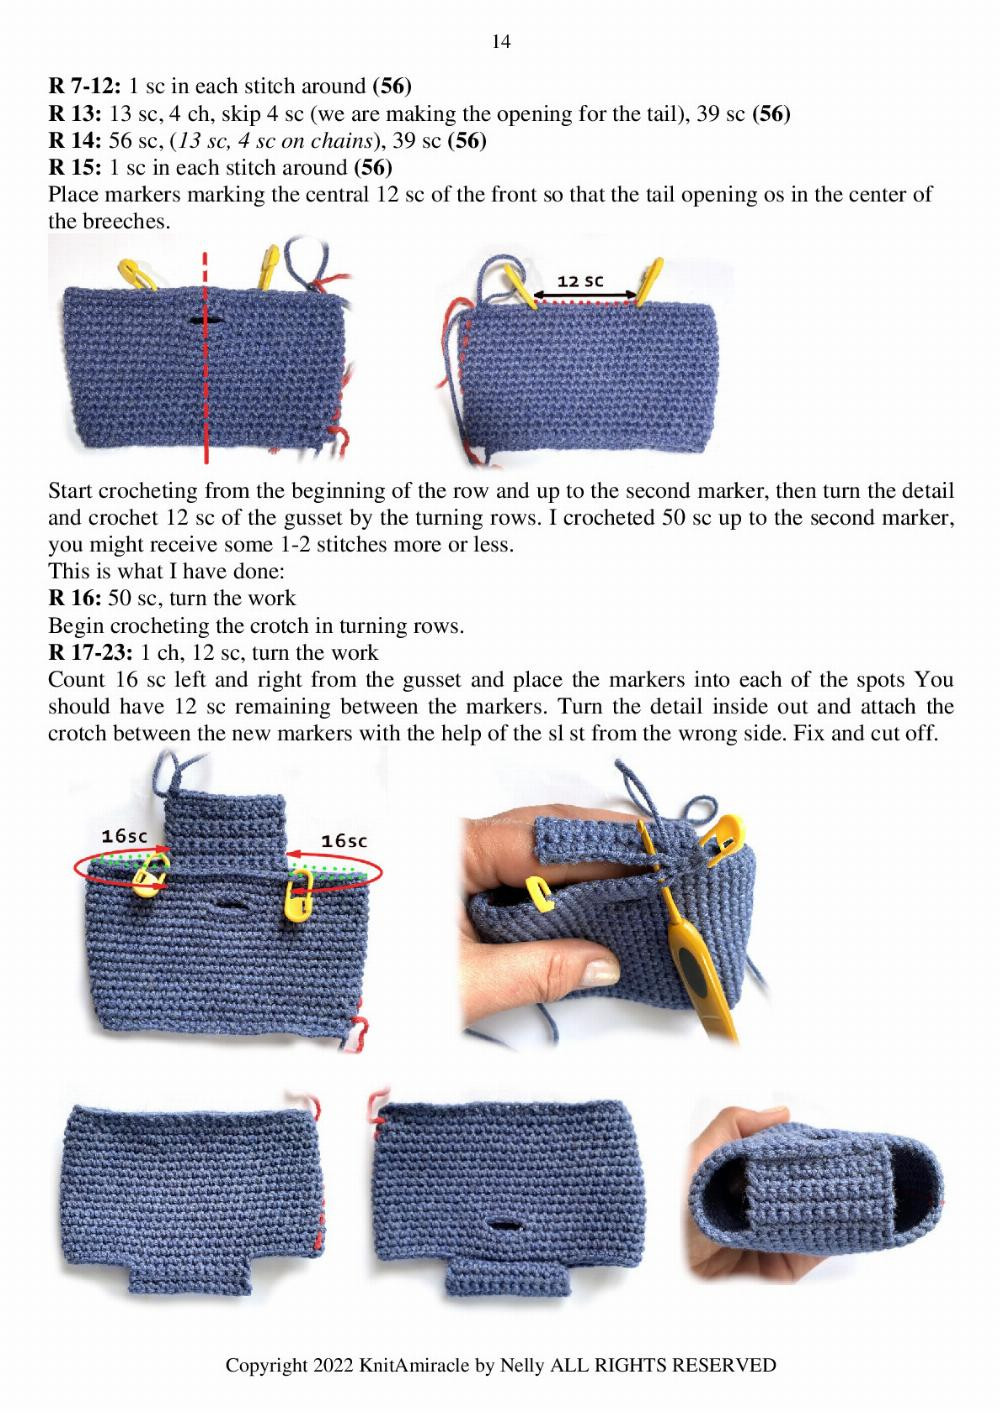 Knit a Miracle crochet pattern